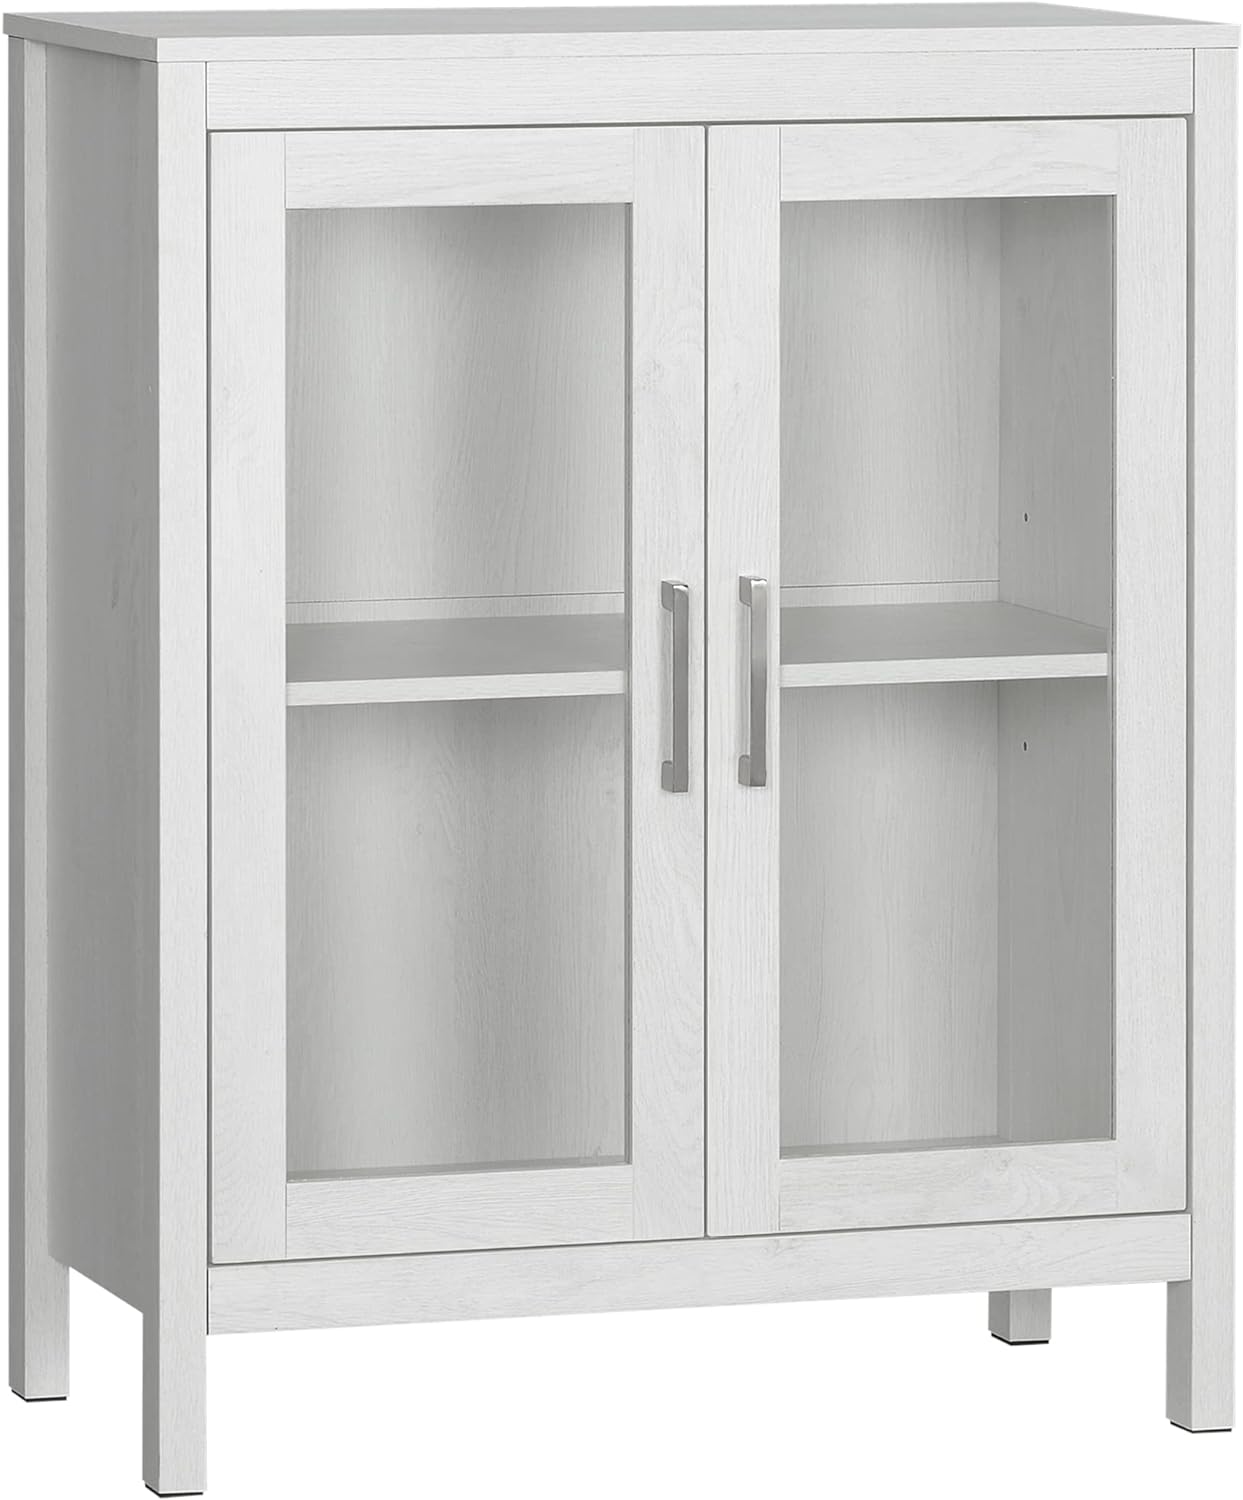 kleankin Modern Bathroom Cabinet, Bathroom Storage Organizer with Double Glass Doors and Adjustable Shelf, White